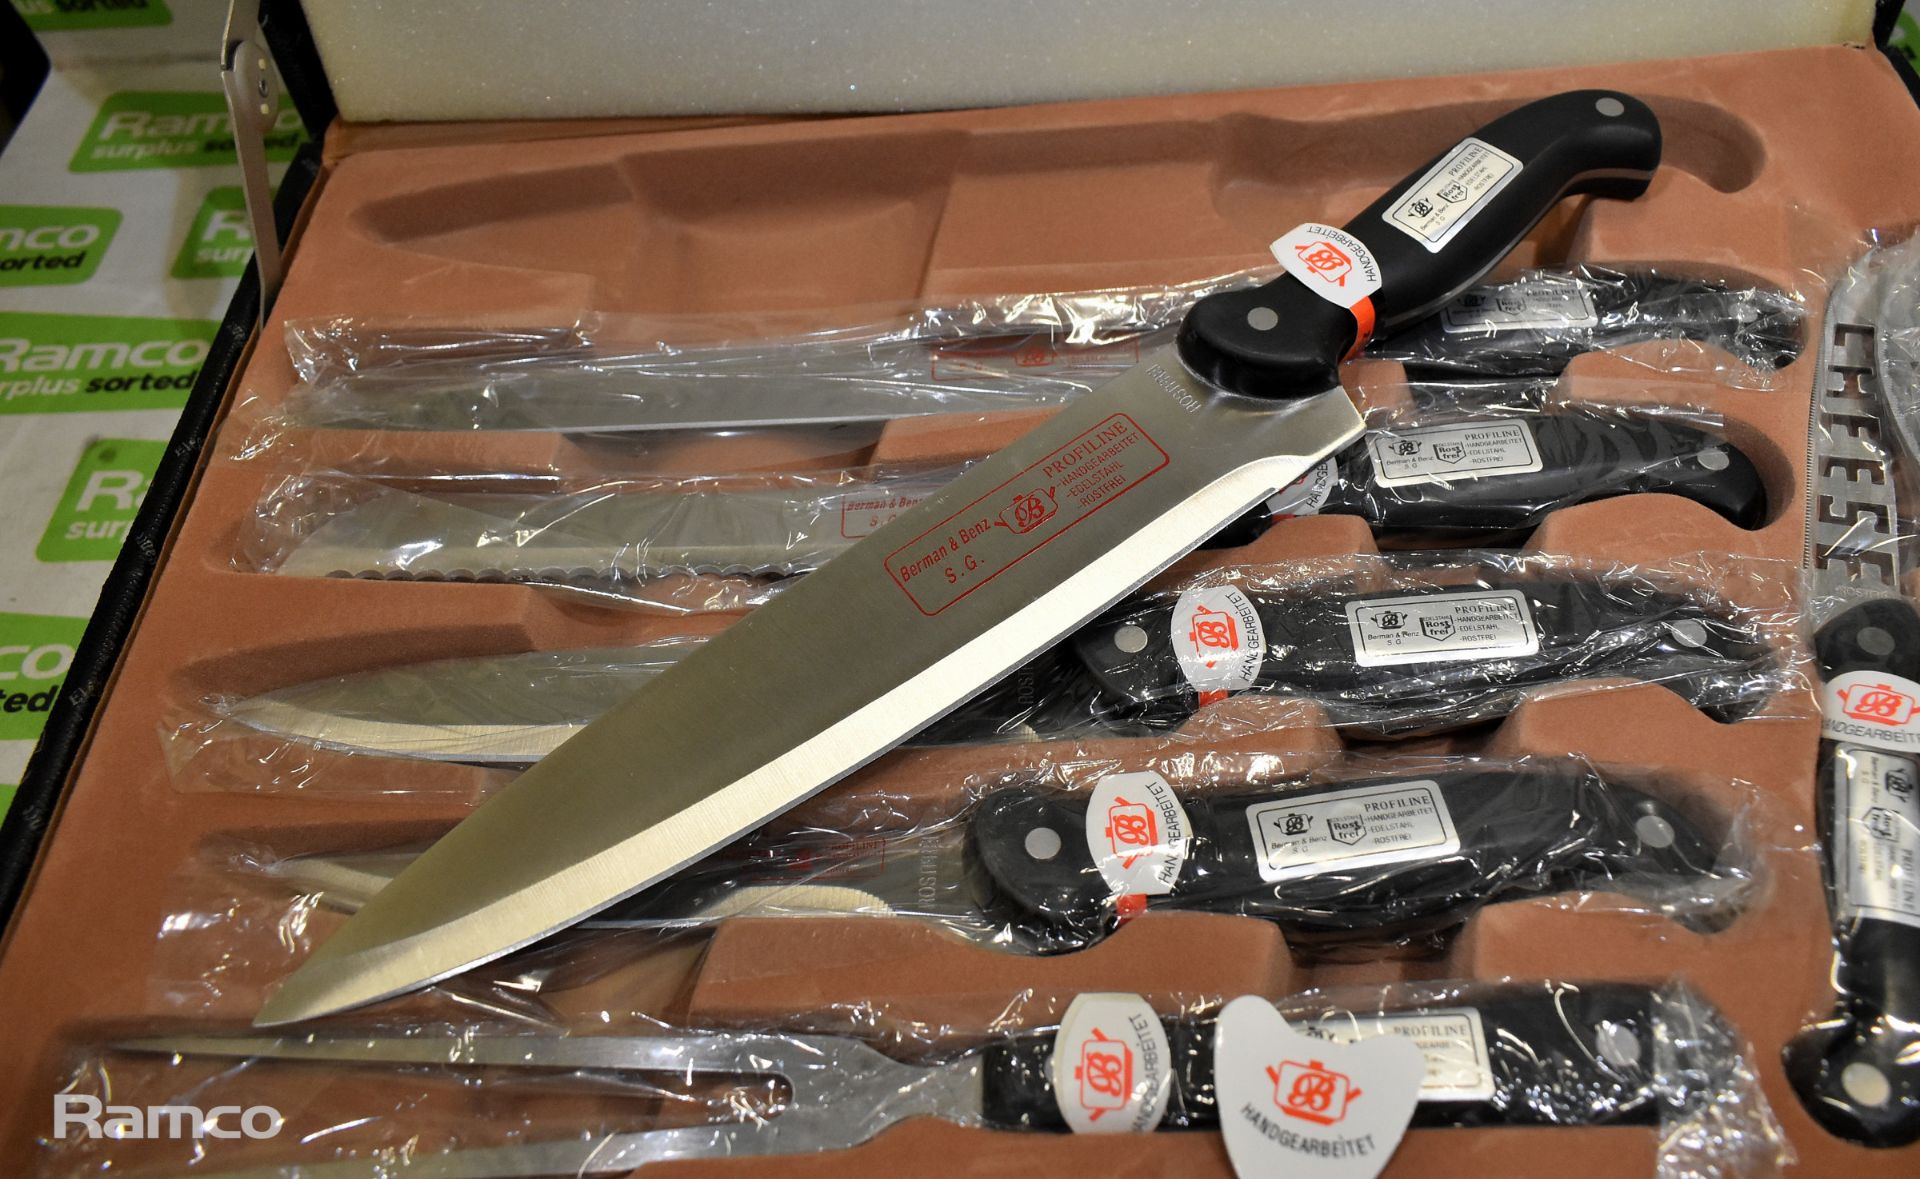 Berman & Benz kitchen knife set, utensil set in brief case - Image 3 of 10